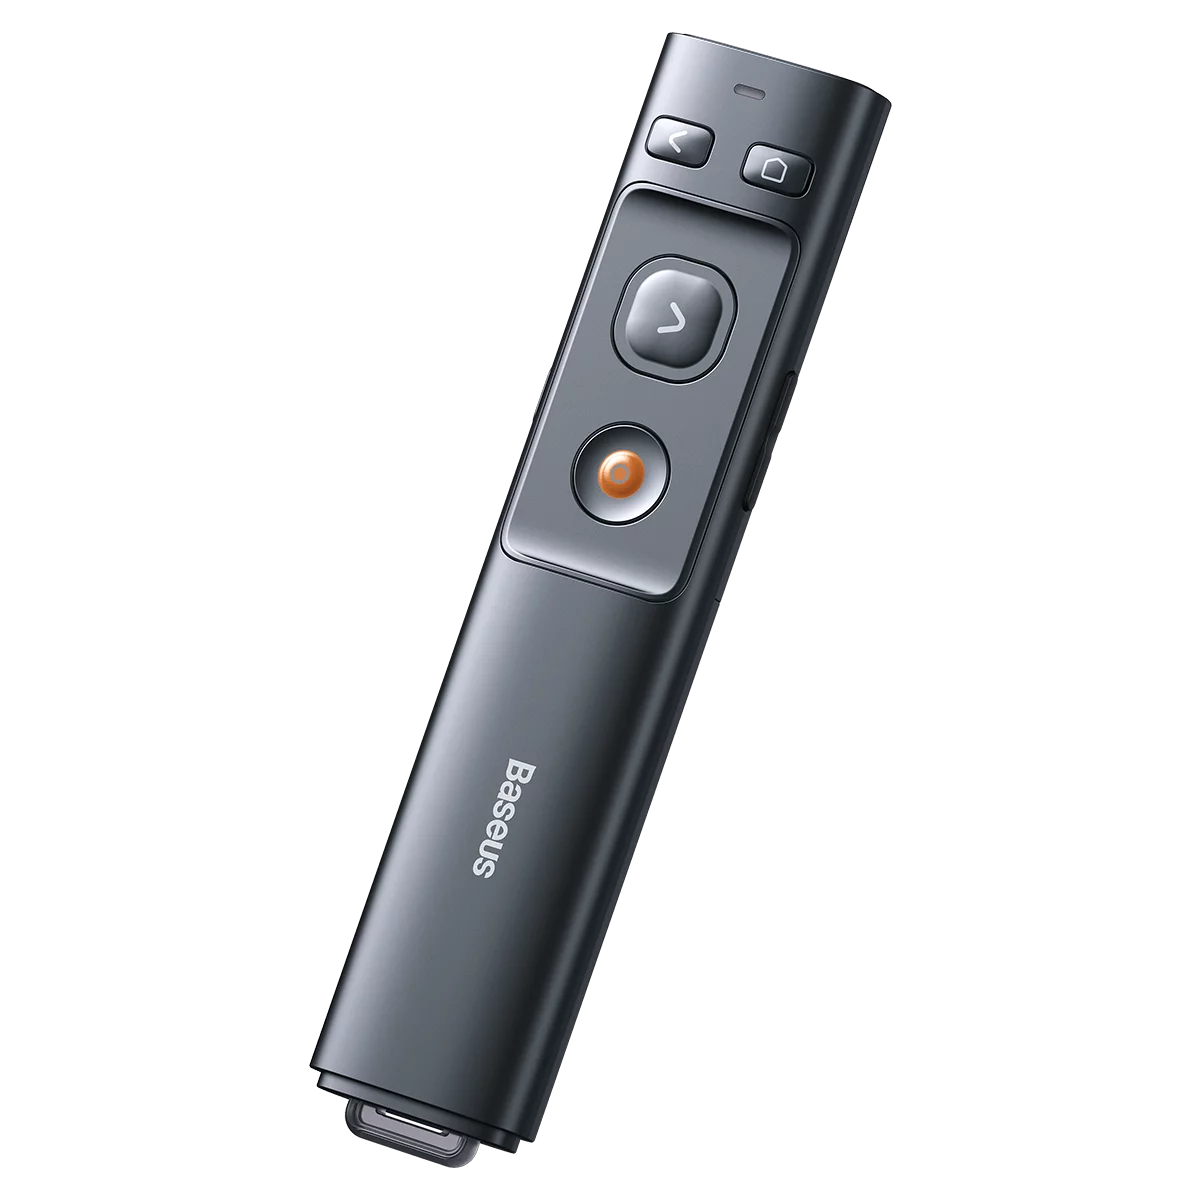 Baseus USB Wireless PowerPoint PPT Presenter Clicker Pointer Pen Remote Control